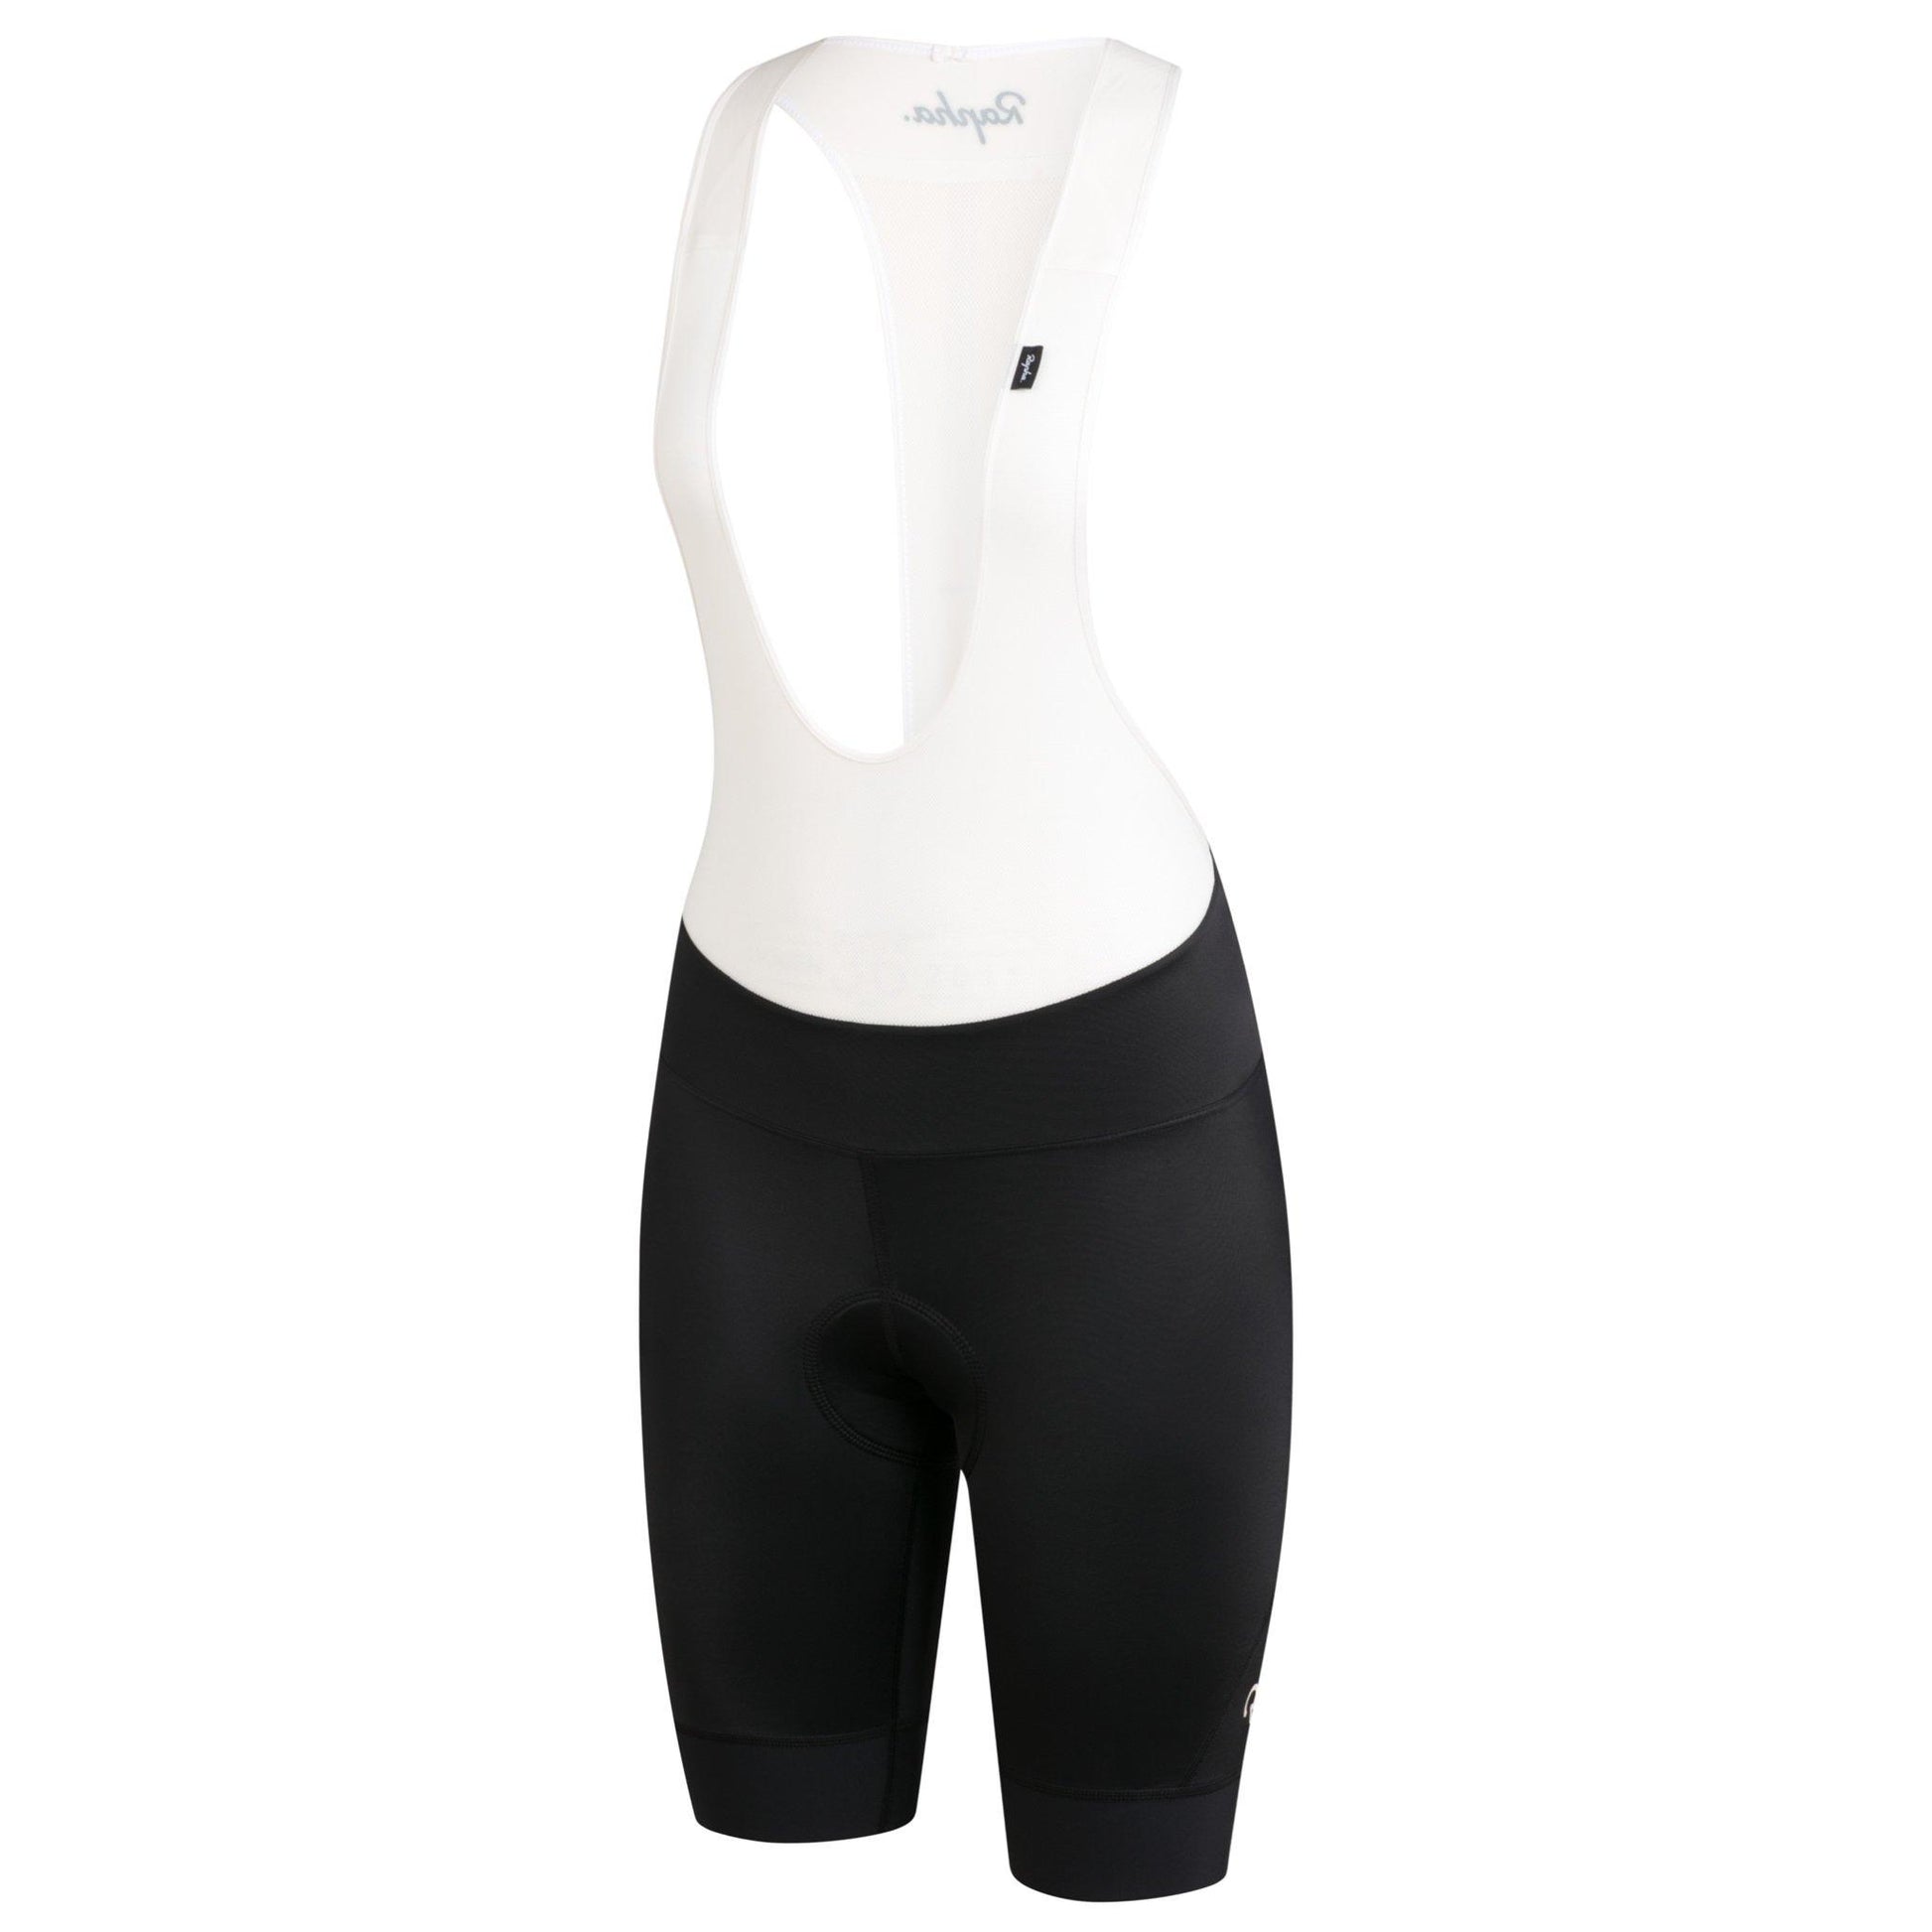 Rapha Women's Pro Team Detachable Race Bib Shorts - Black/White buy online at Woolys Wheels Bike Shop Sydney with free delivery